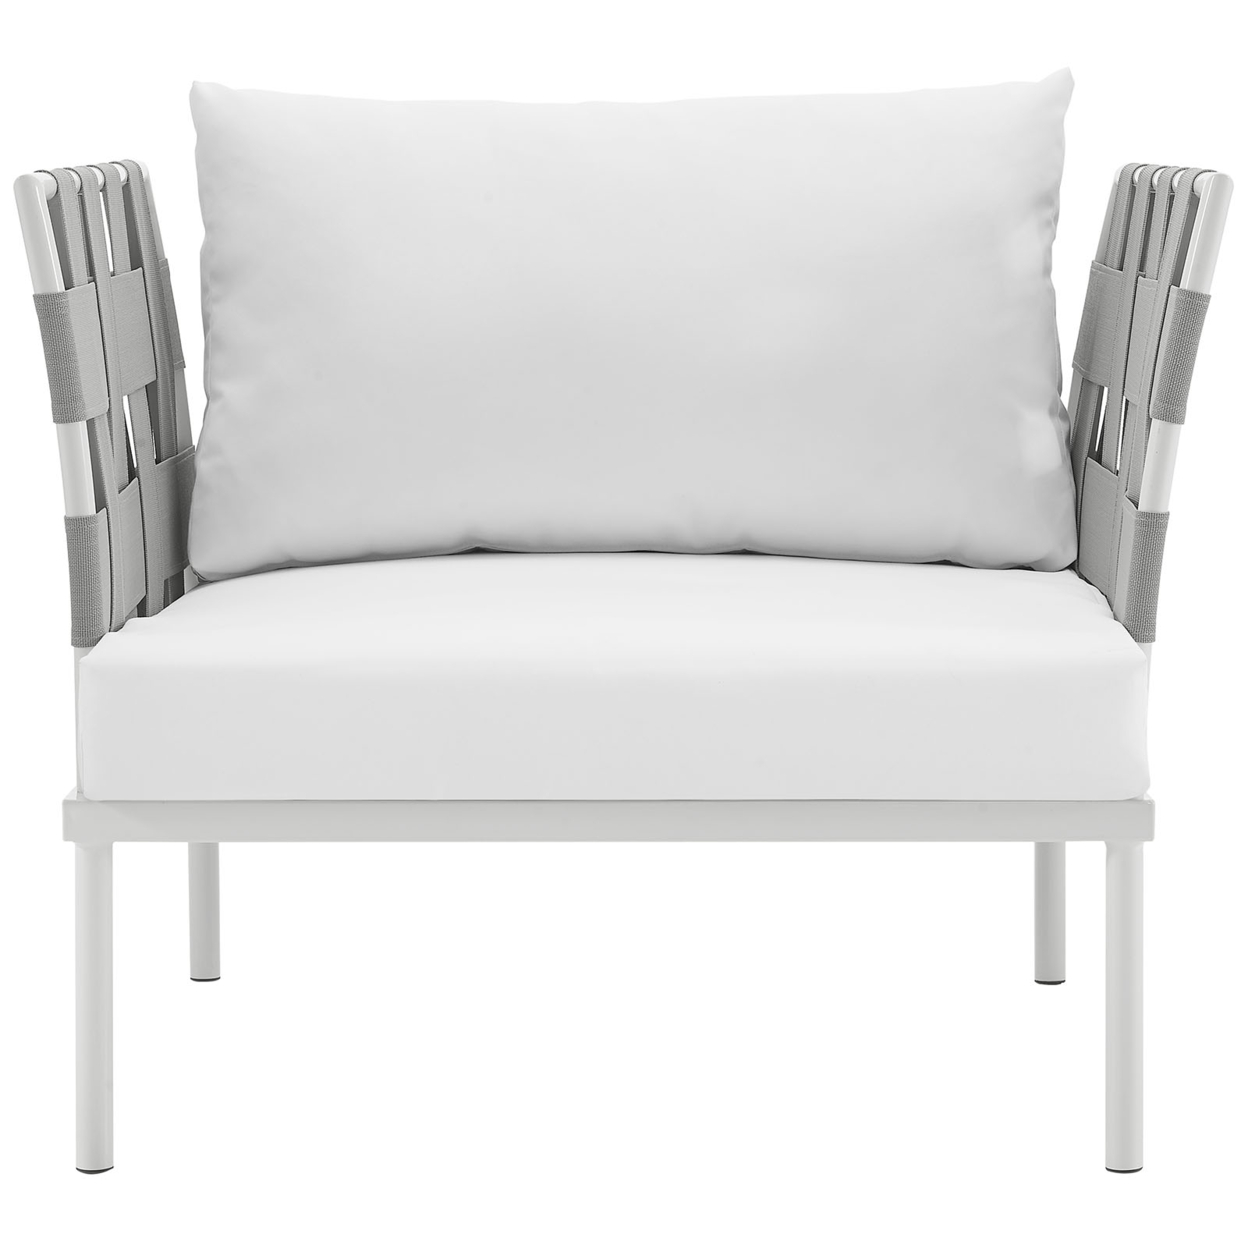 Harmony Outdoor Patio Aluminum Armchair, White White